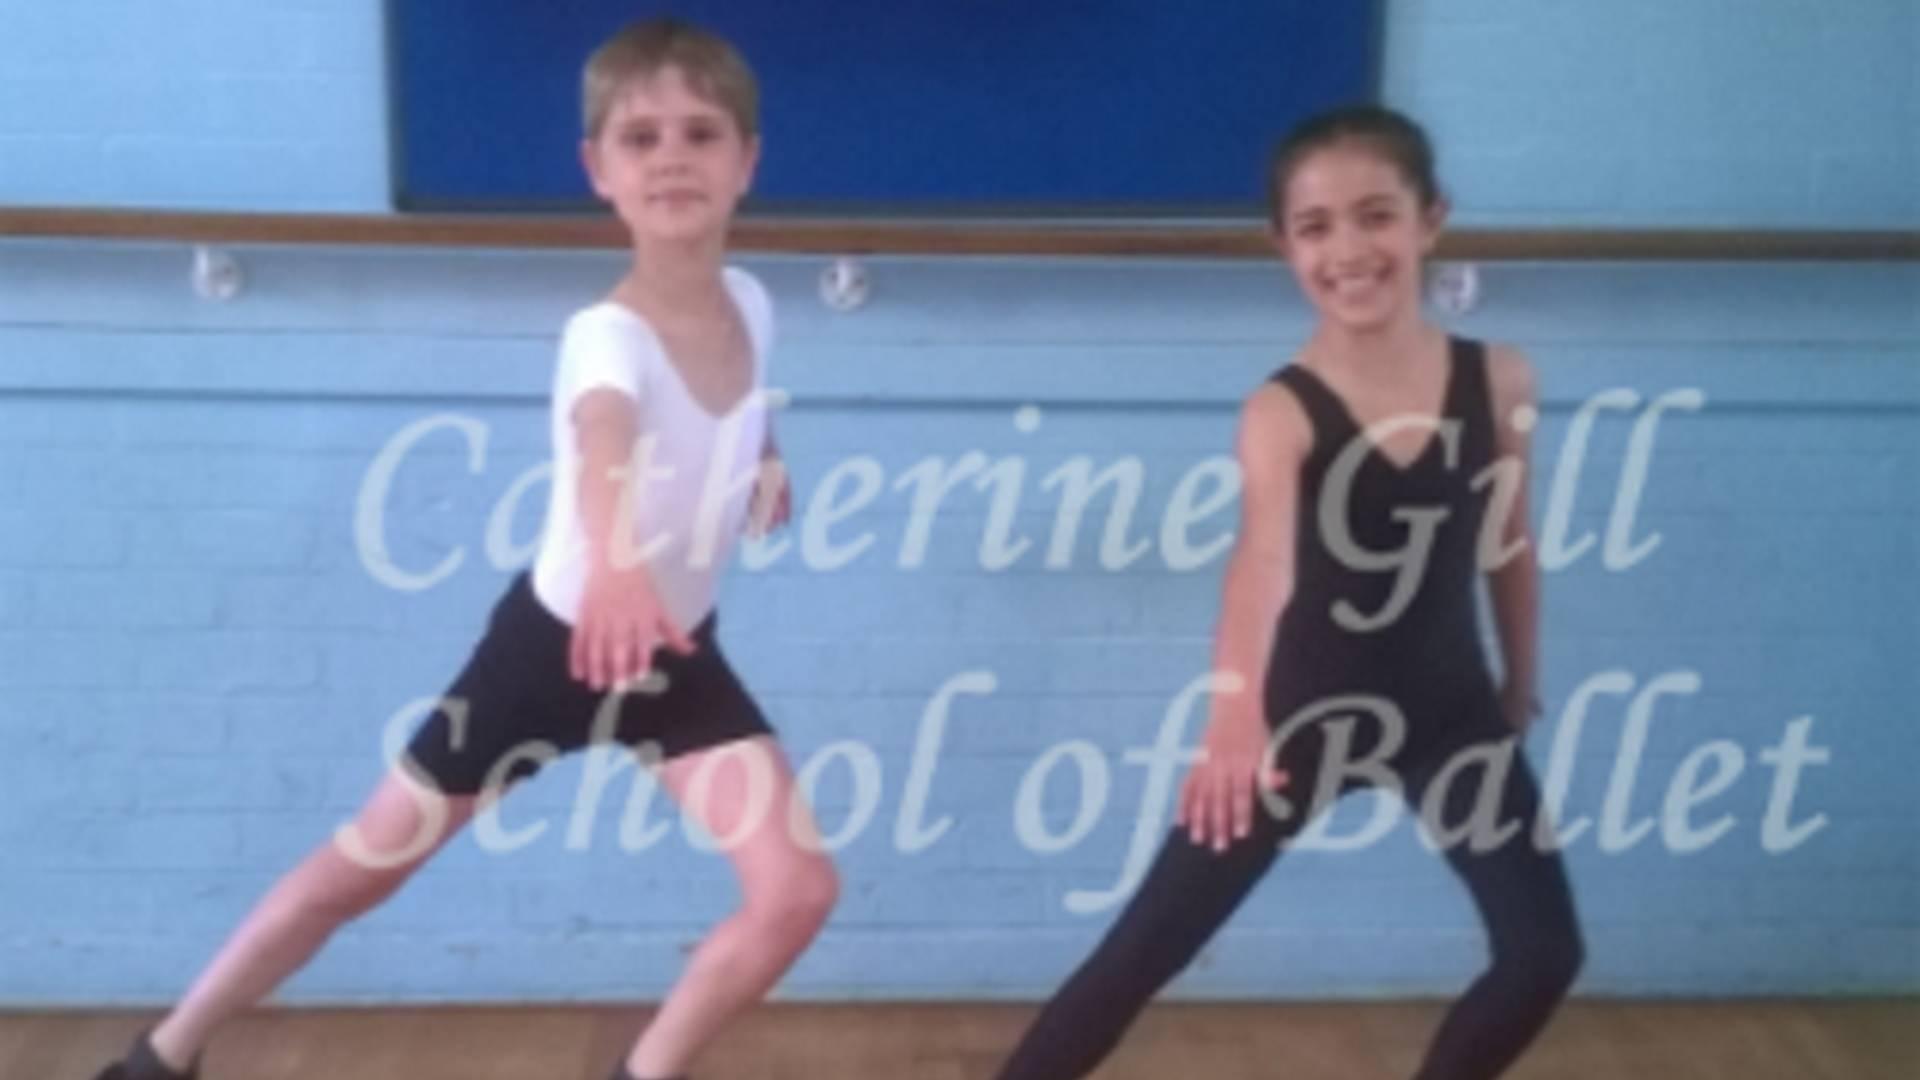 Catherine Gill School of Ballet photo